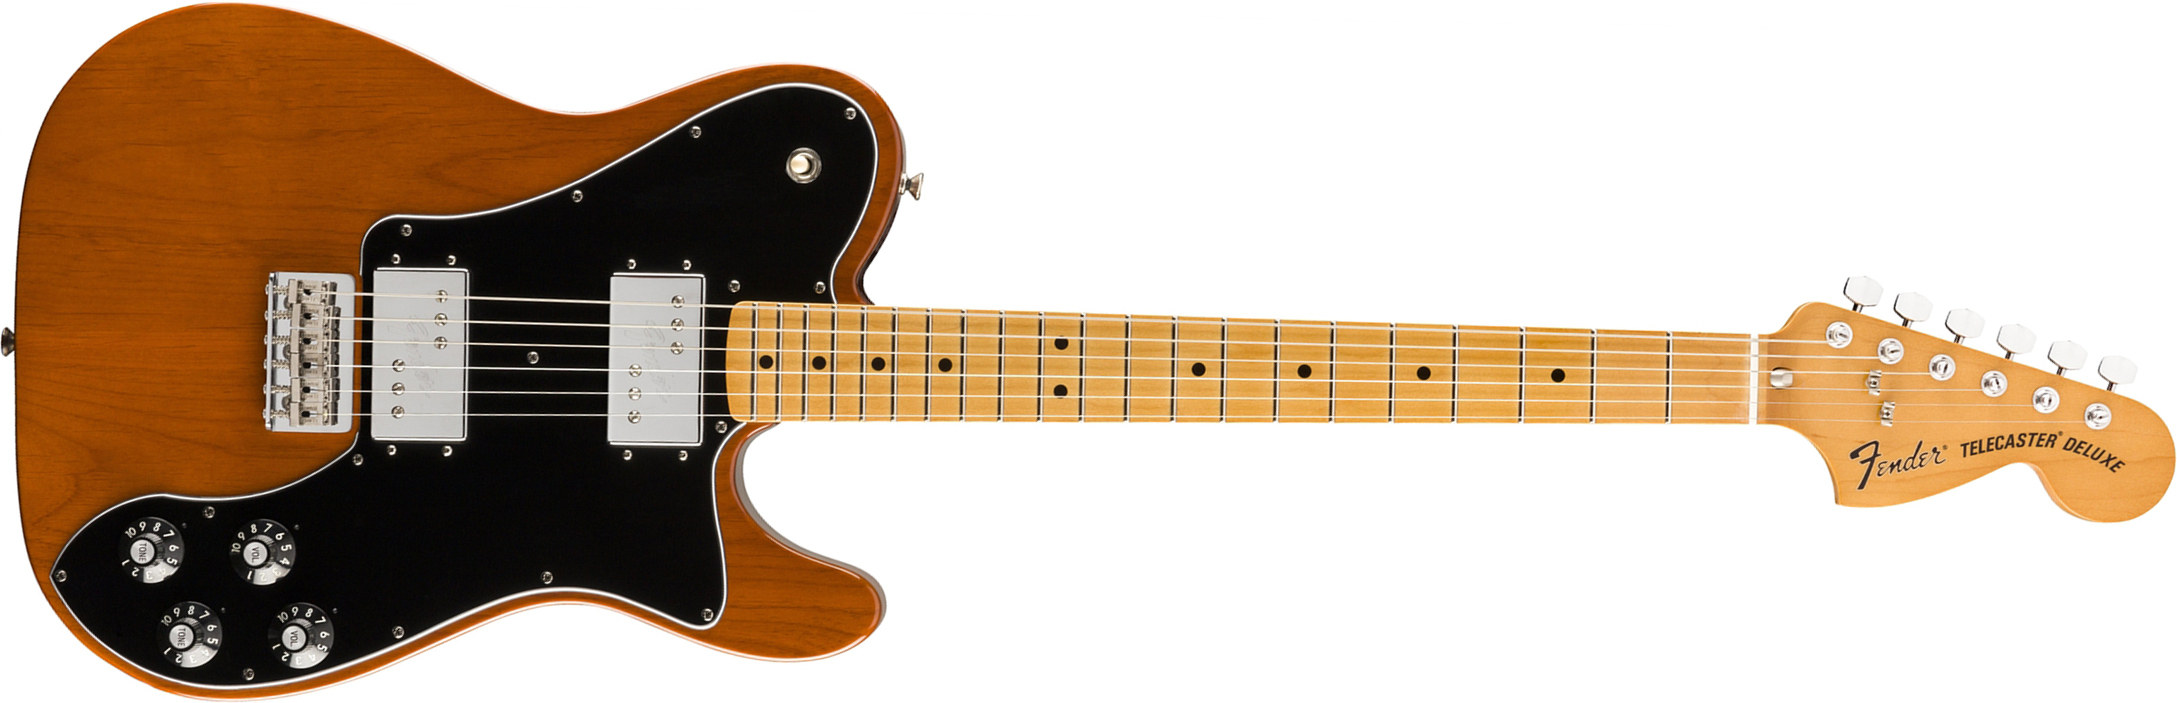 Fender Tele 70s Deluxe Vintera Vintage Mex Mn - Mocha - Tel shape electric guitar - Main picture